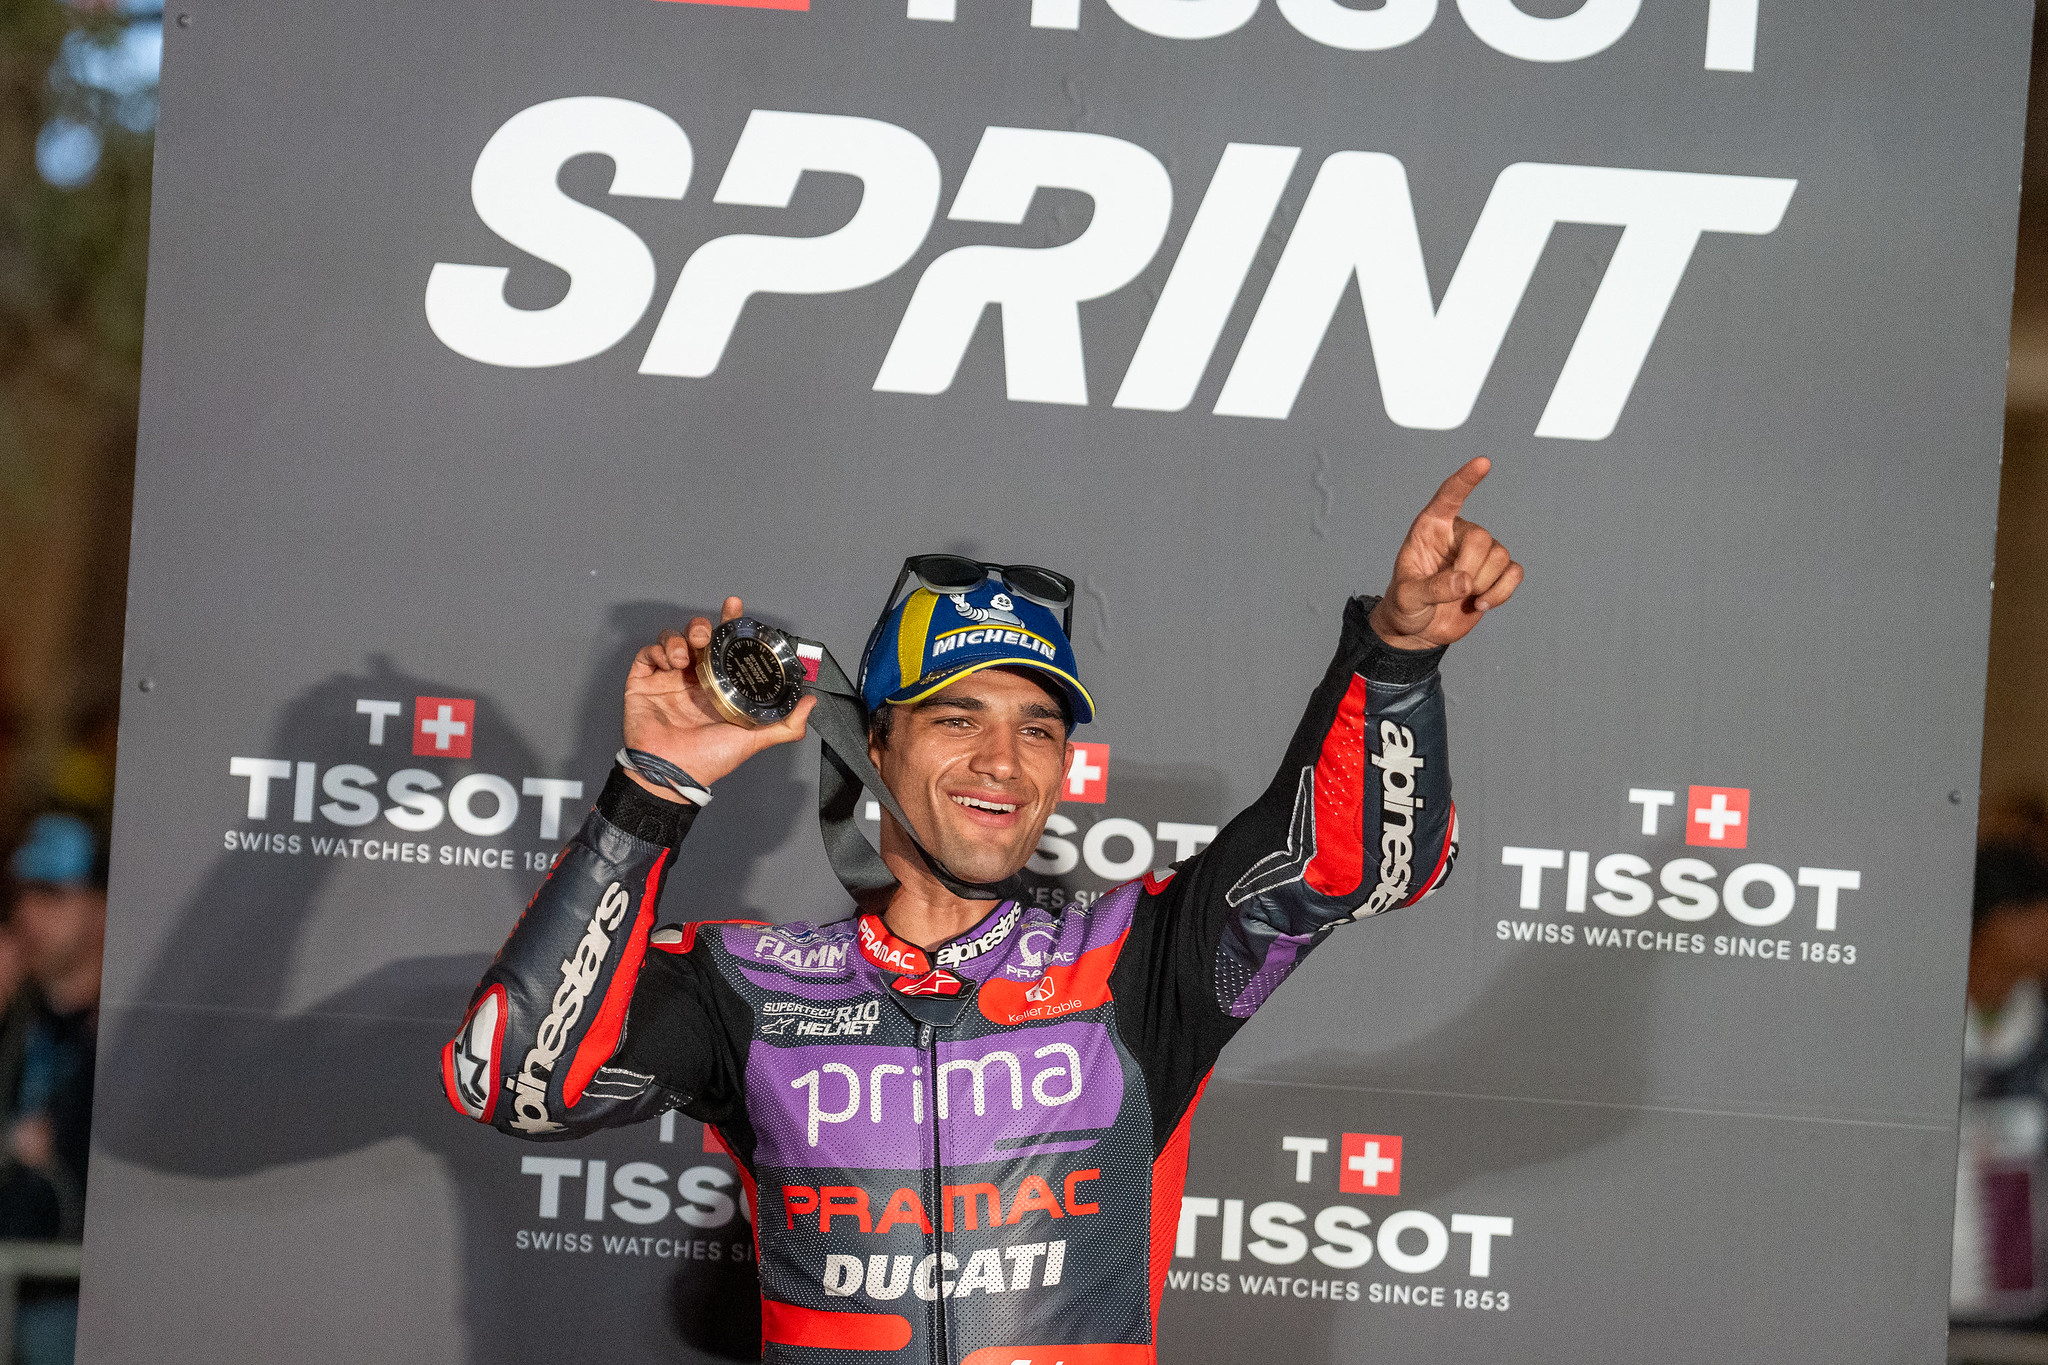 #89 Jorge Martin - (SPA) - Prima Pramac Racing - Ducati Desmosedici GP24